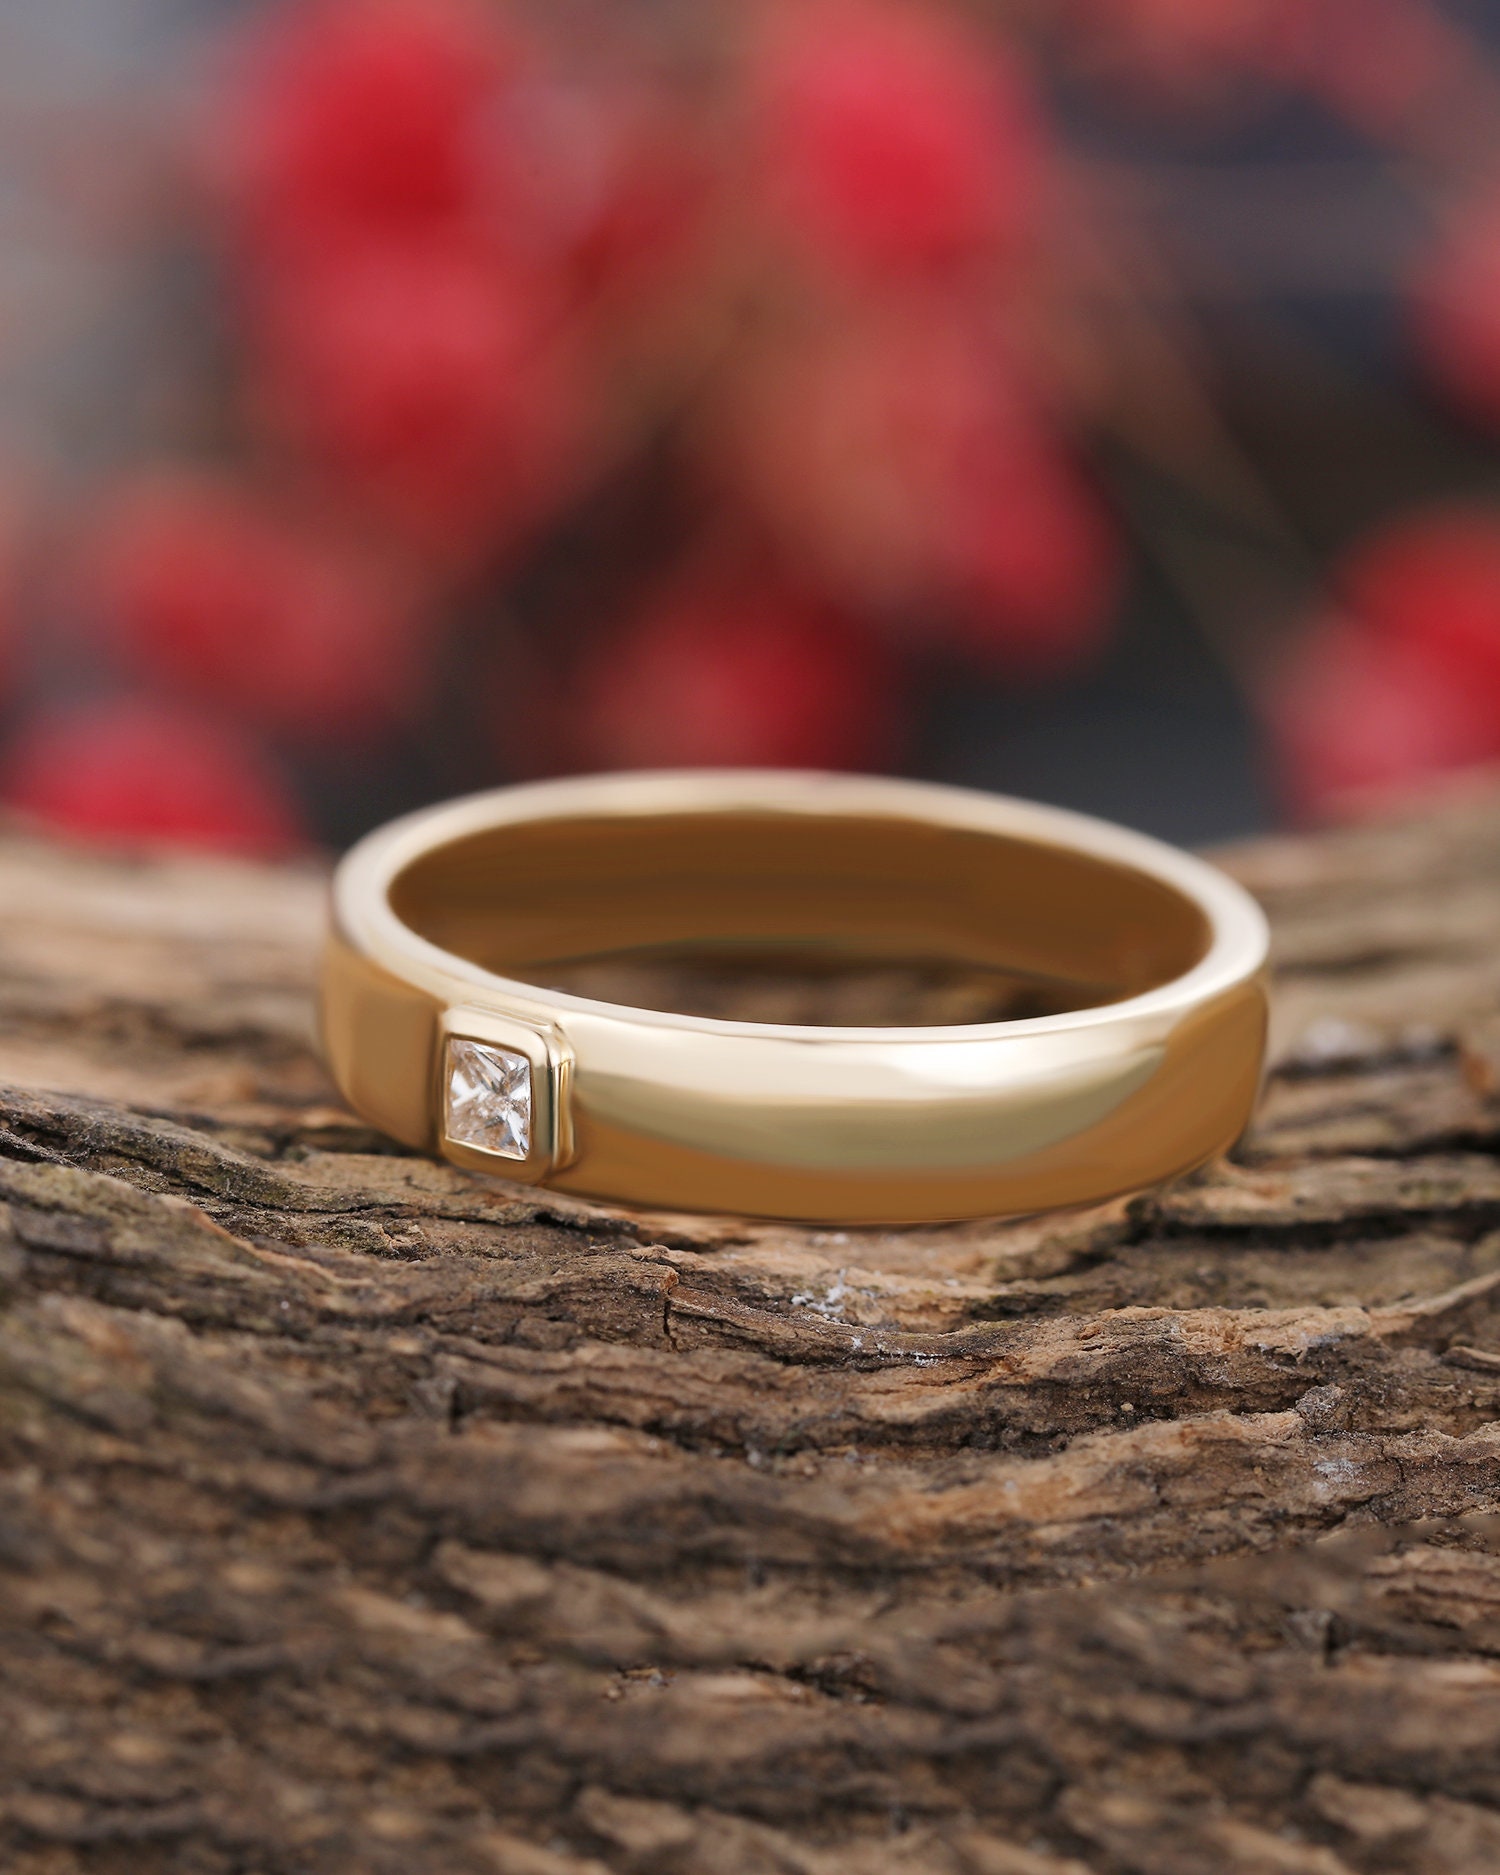 Blog | Friday Favorites: Dazzling Wedding Rings